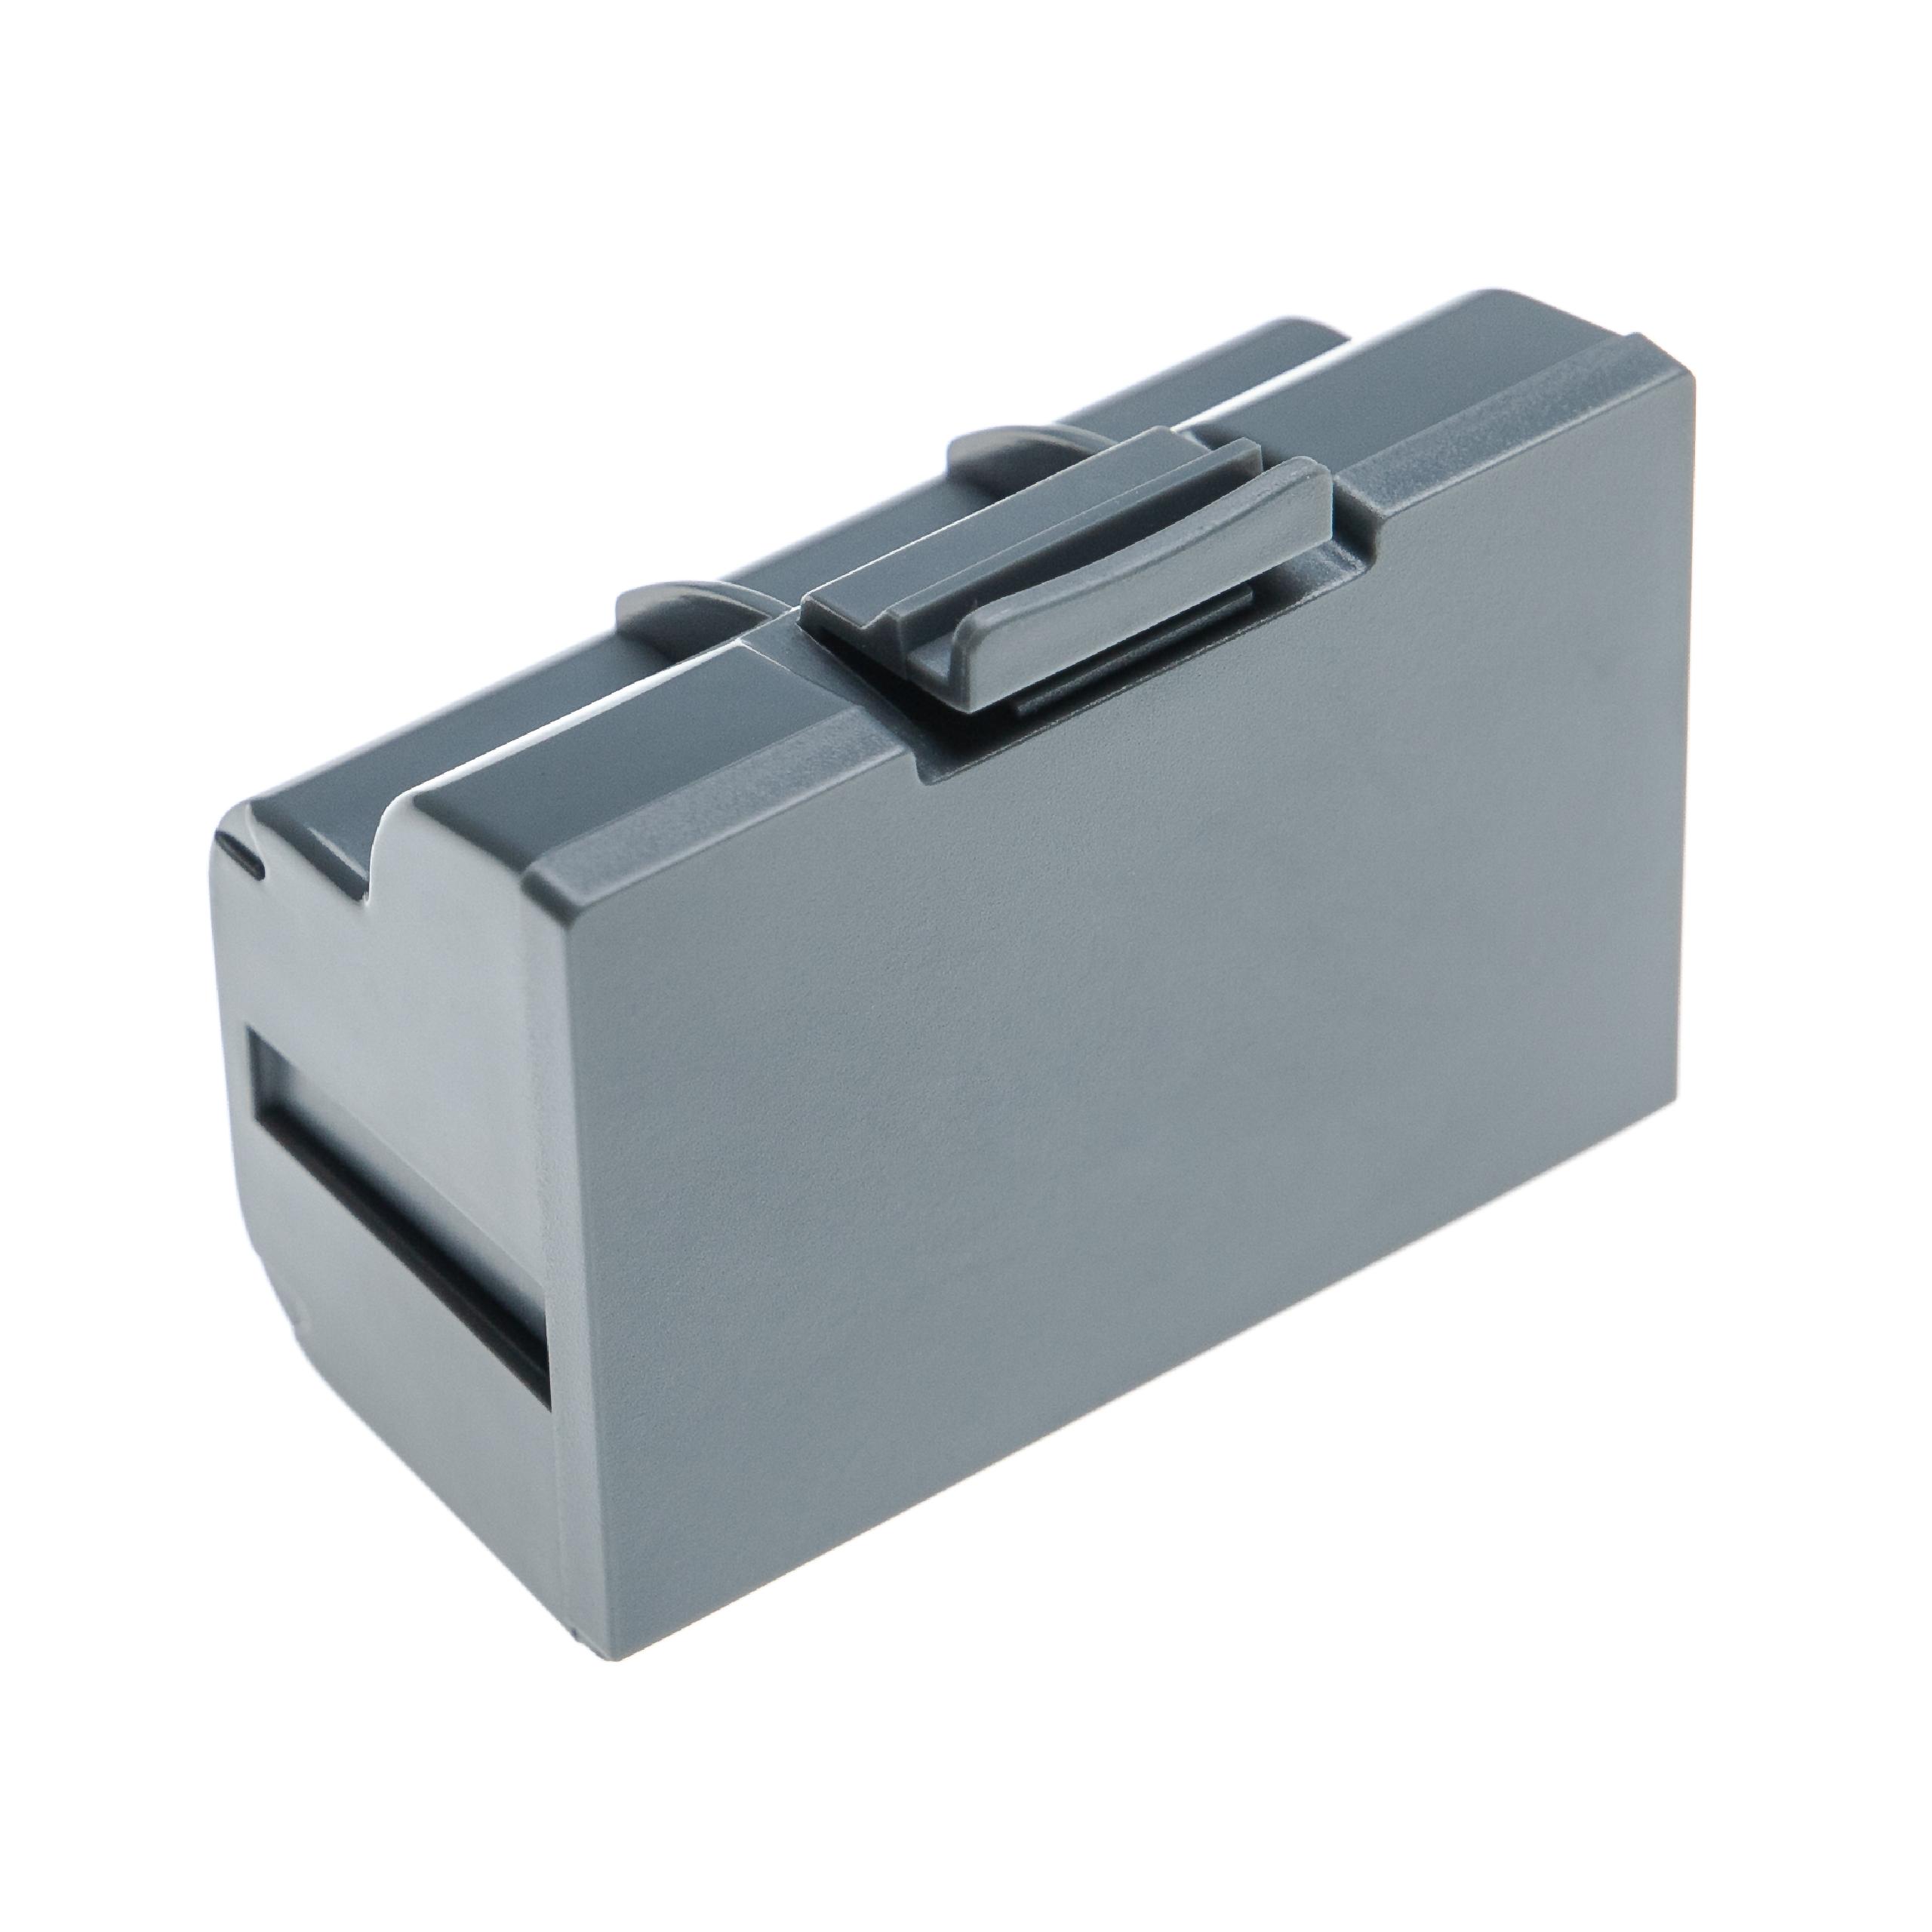 Printer Battery Replacement for Intermec 318-026-001, 318-026-003, 318-026-004 - 3400mAh 14.4V Li-Ion